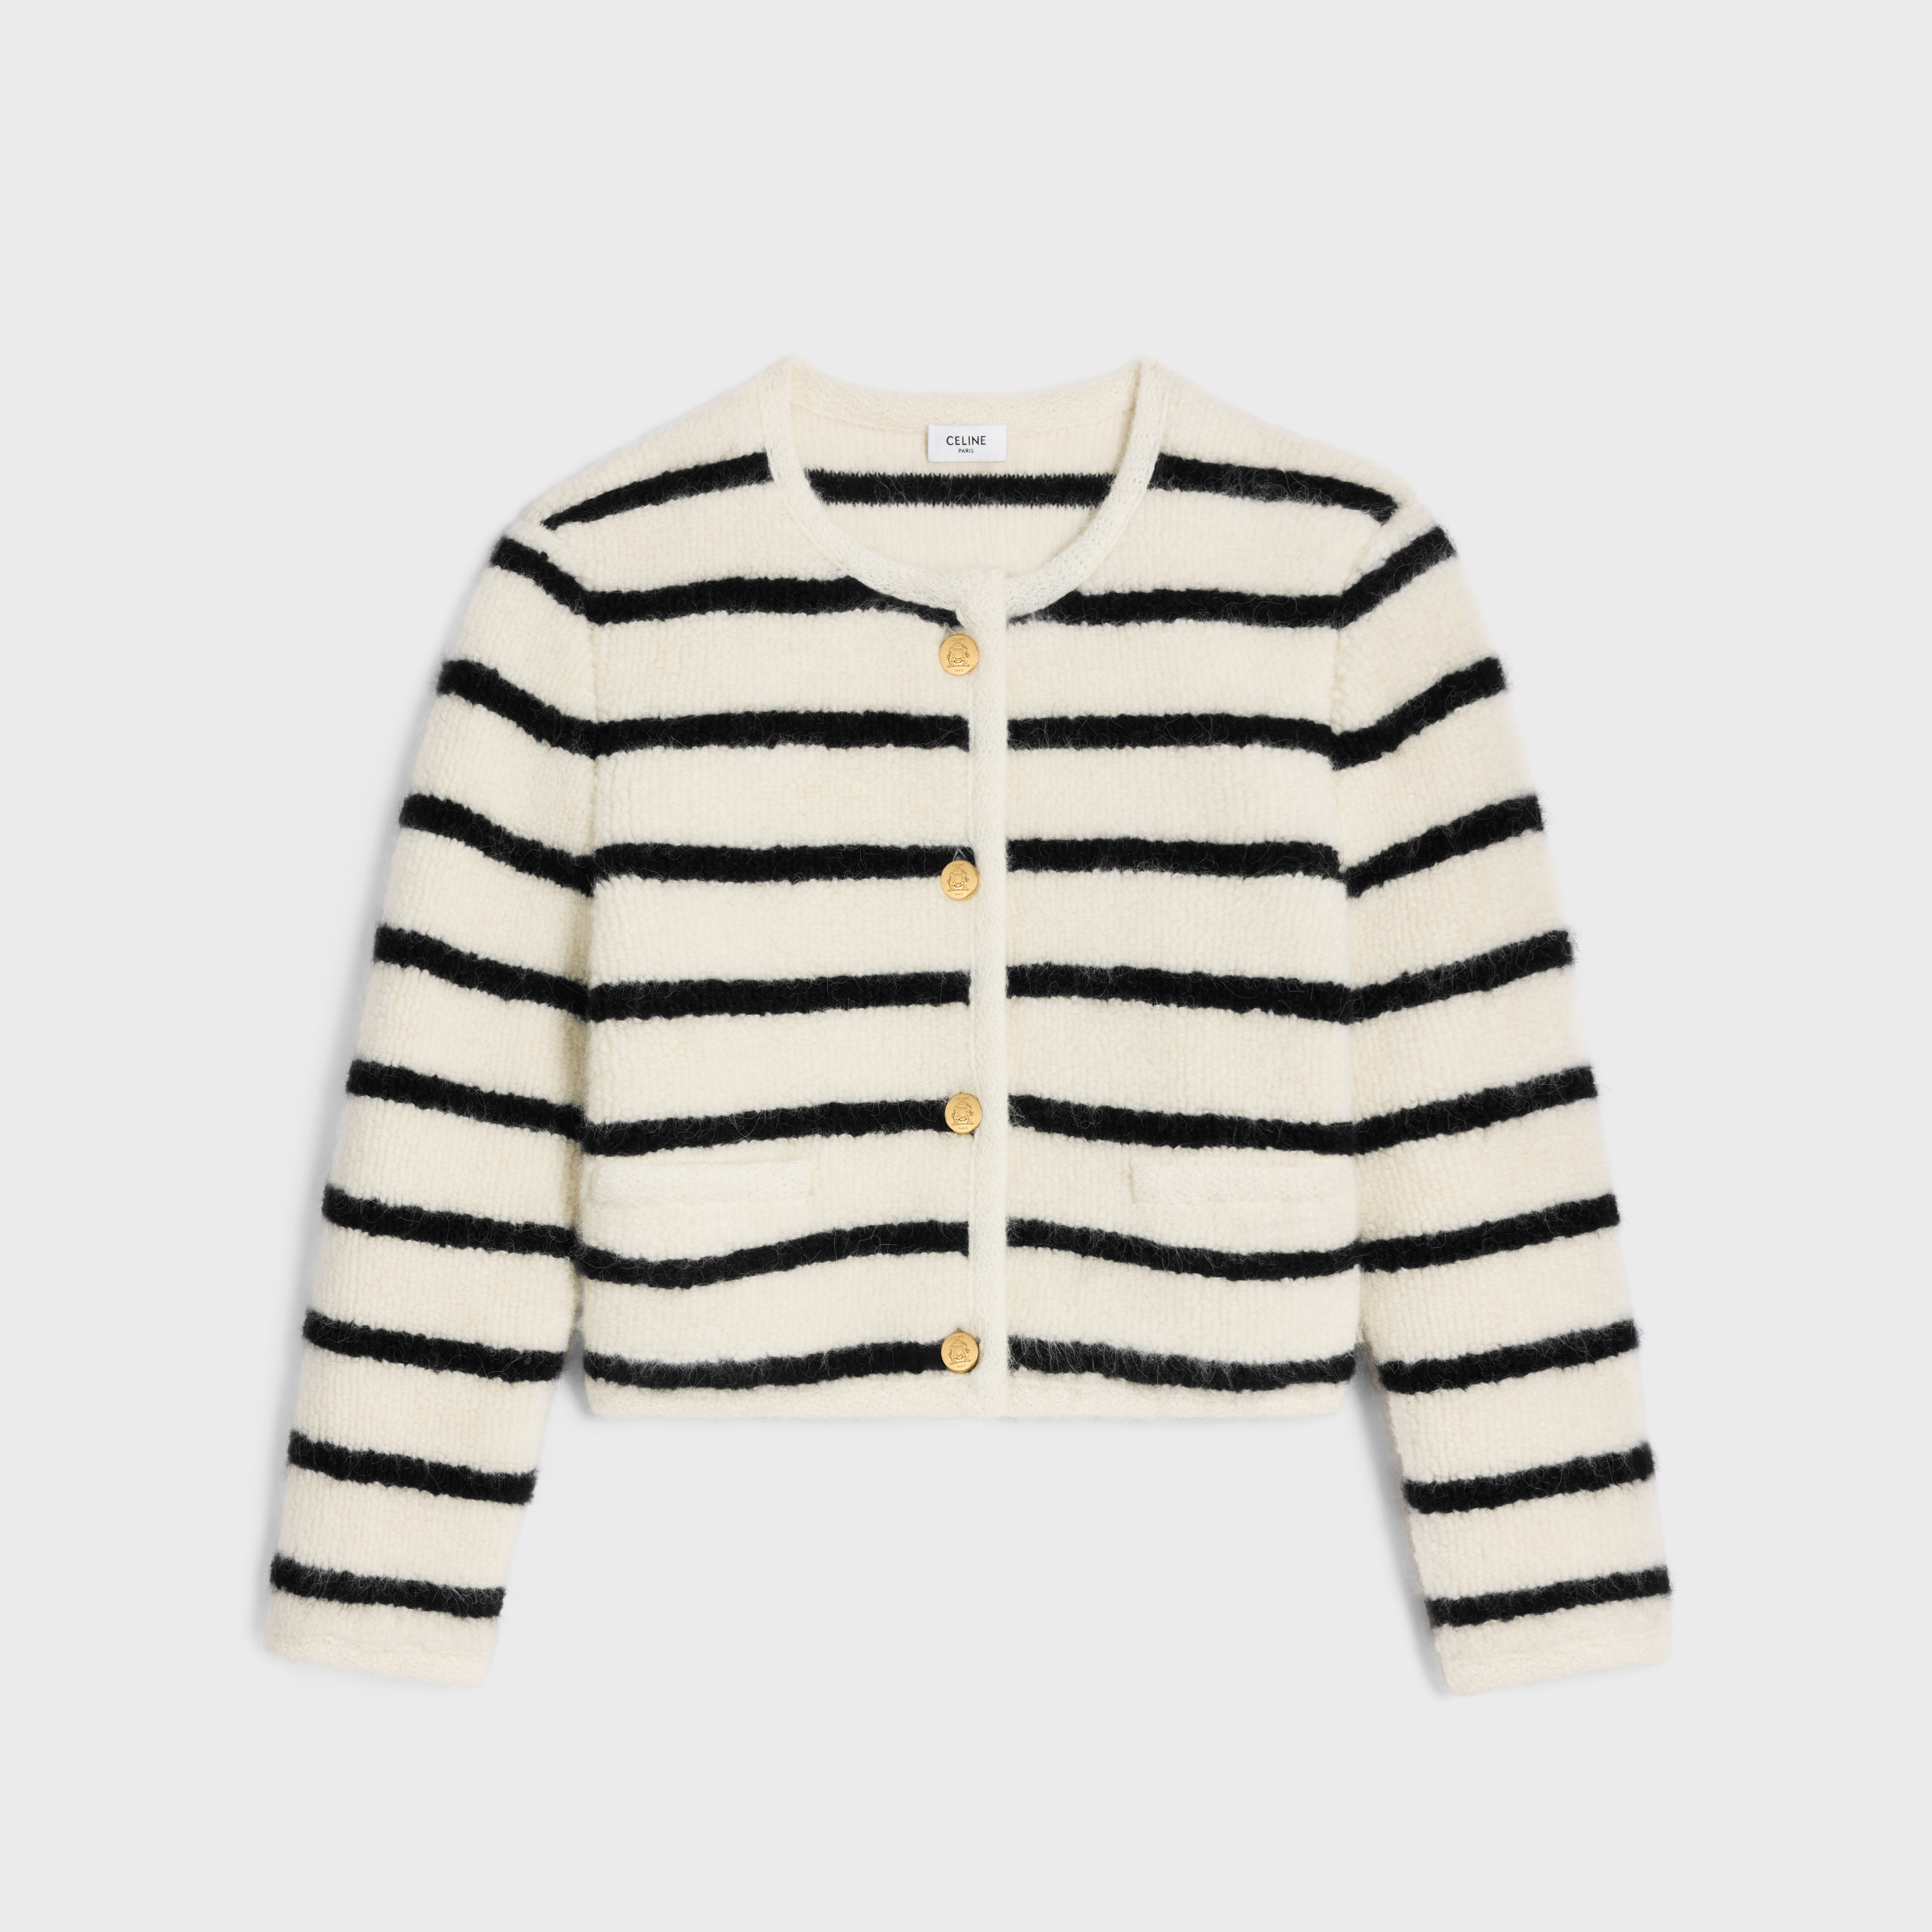 marinière cardigan jacket in wool - 1